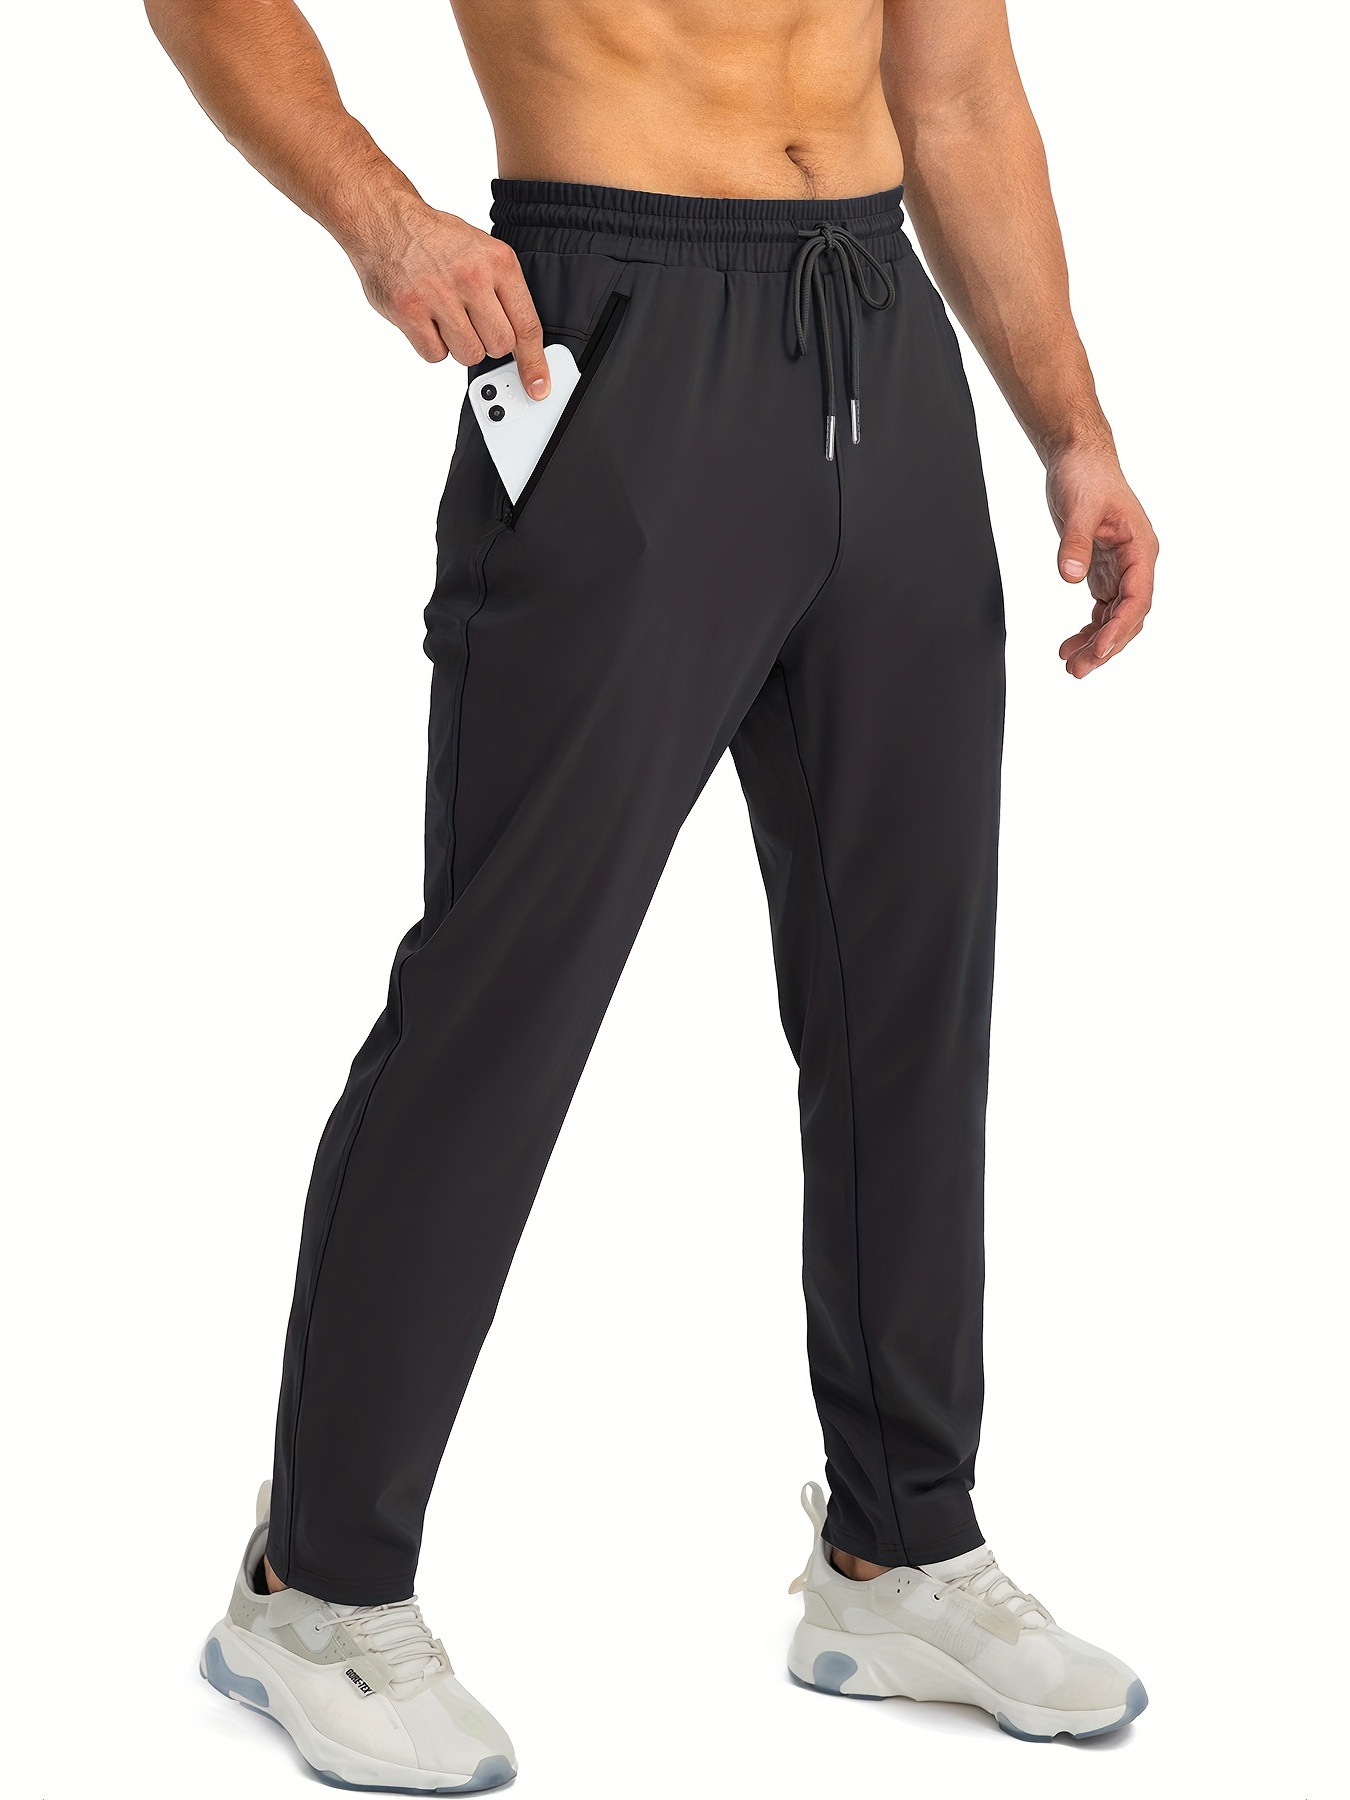 Black Rapid Slim Super Stretch Pant, Men's Bottom